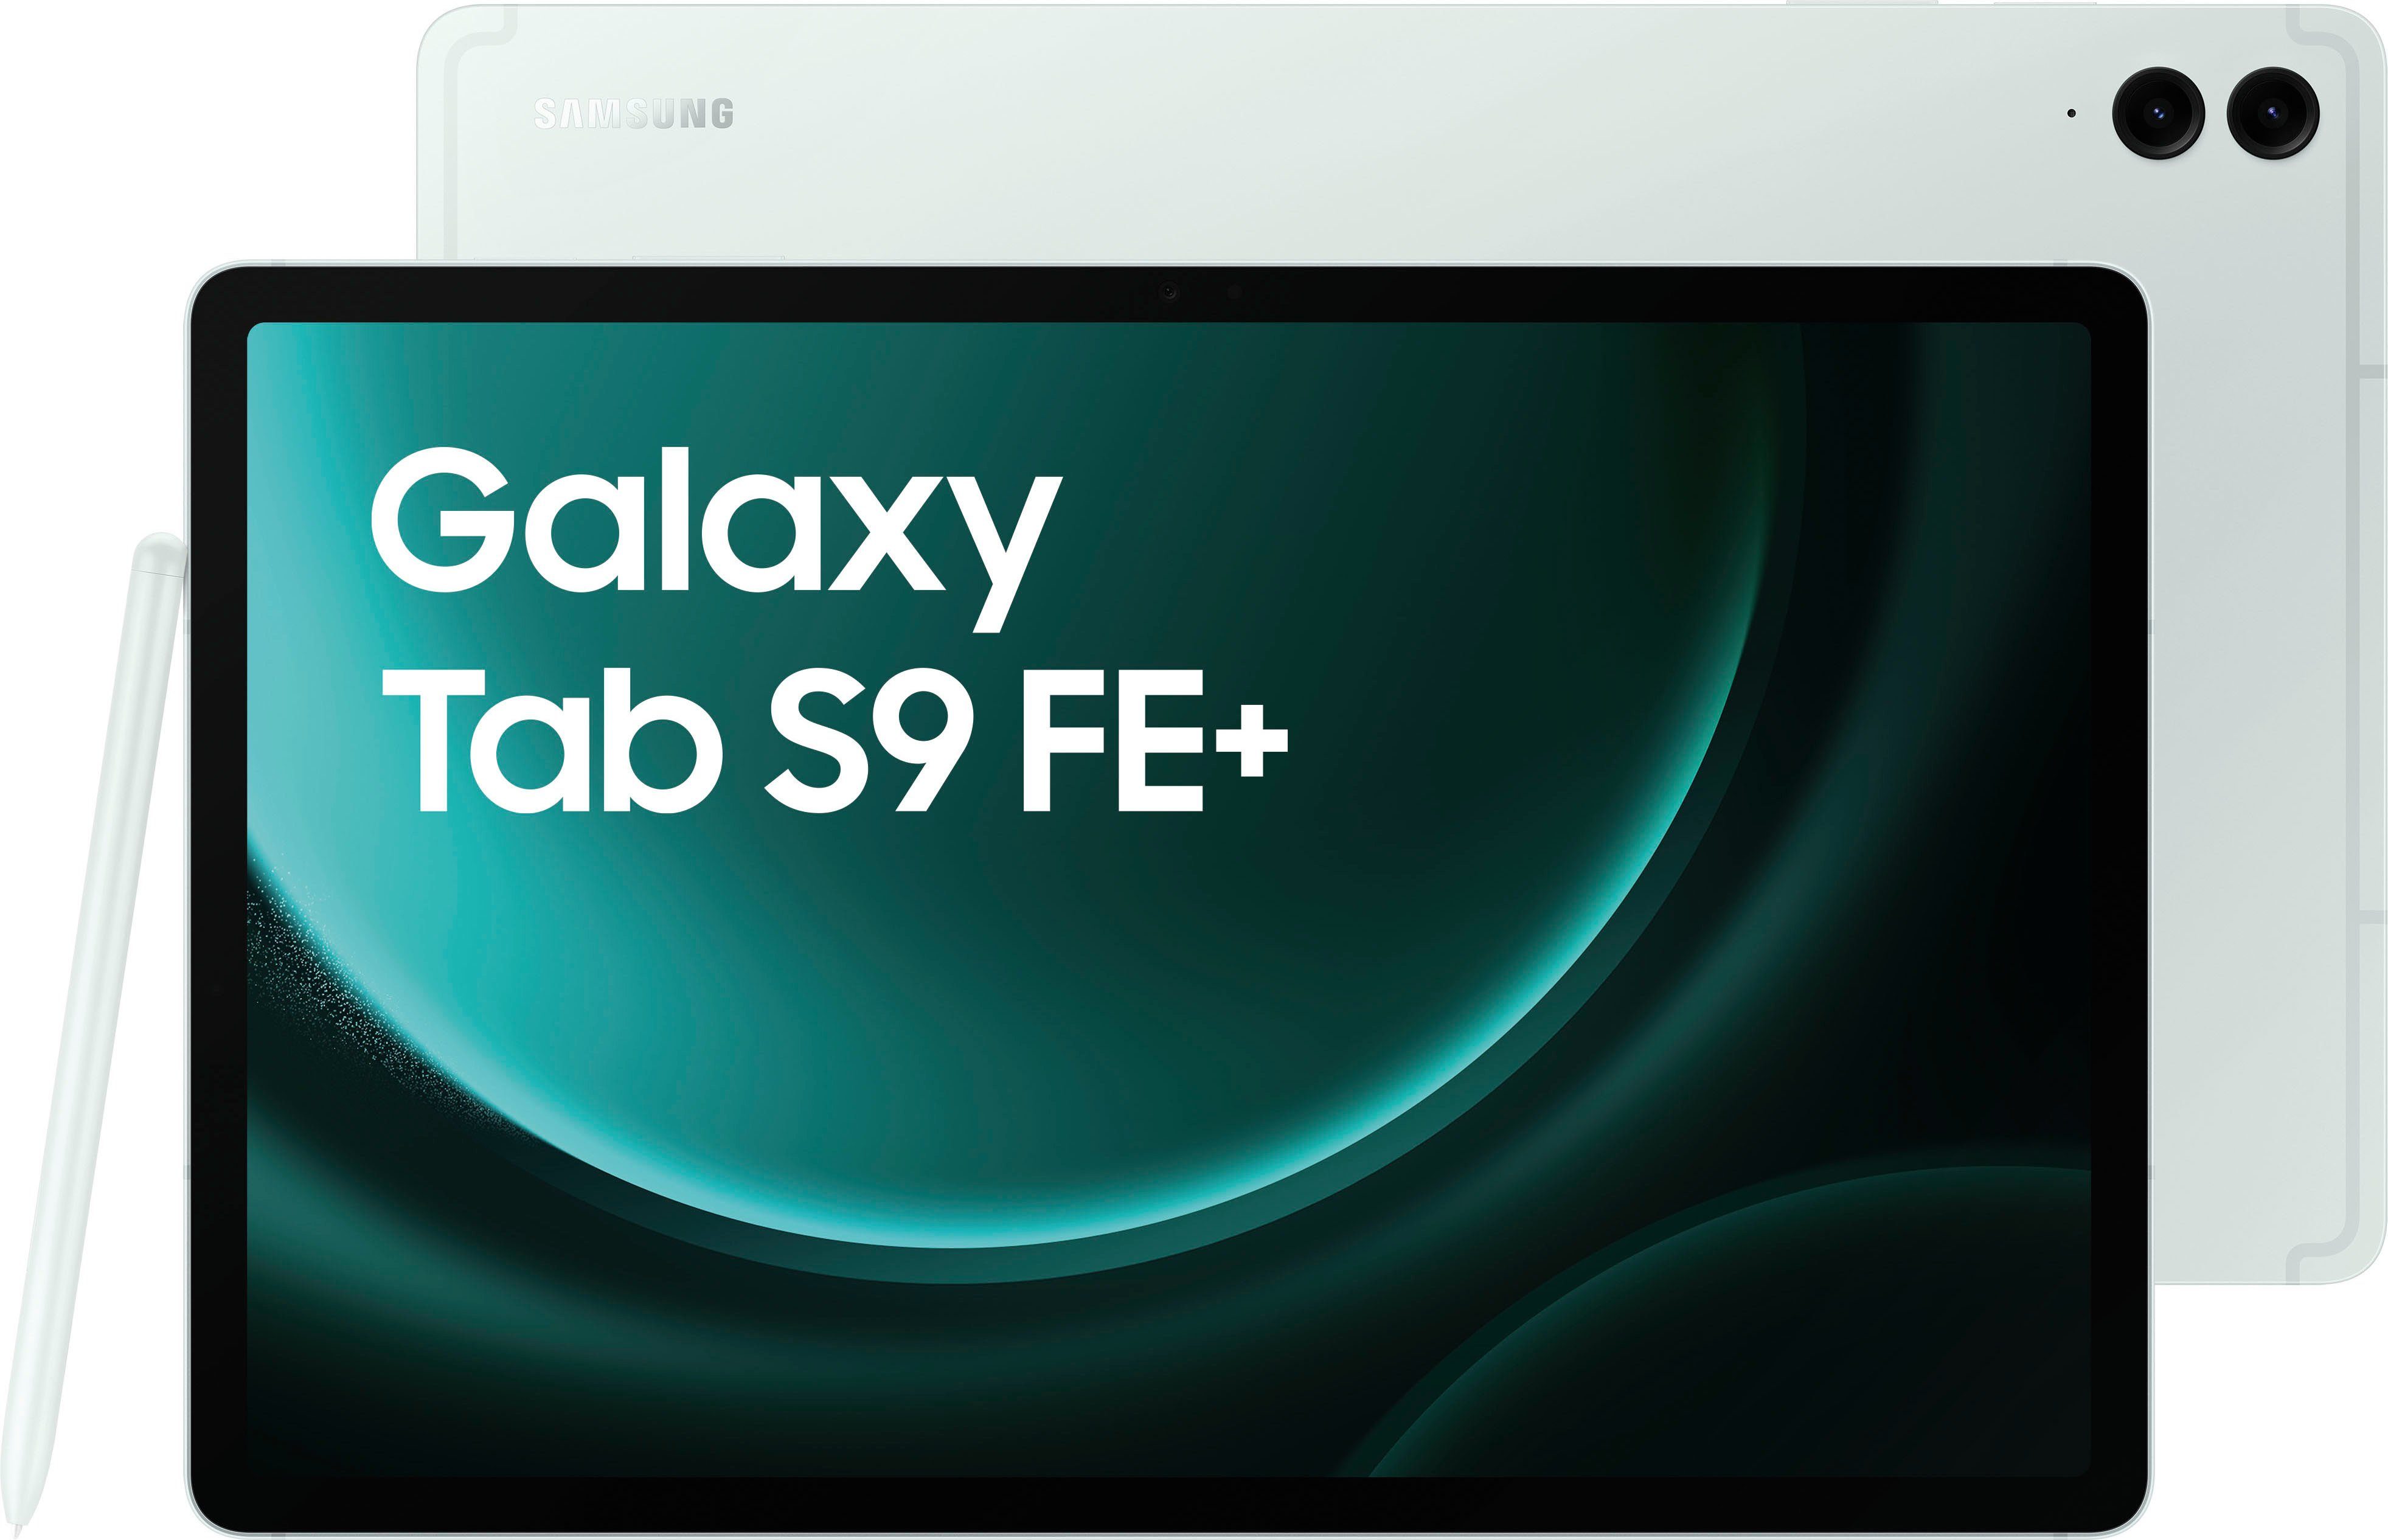 Galaxy Android,One (12,4", Samsung Tab mint 128 FE+ Tablet S9 UI,Knox) GB,